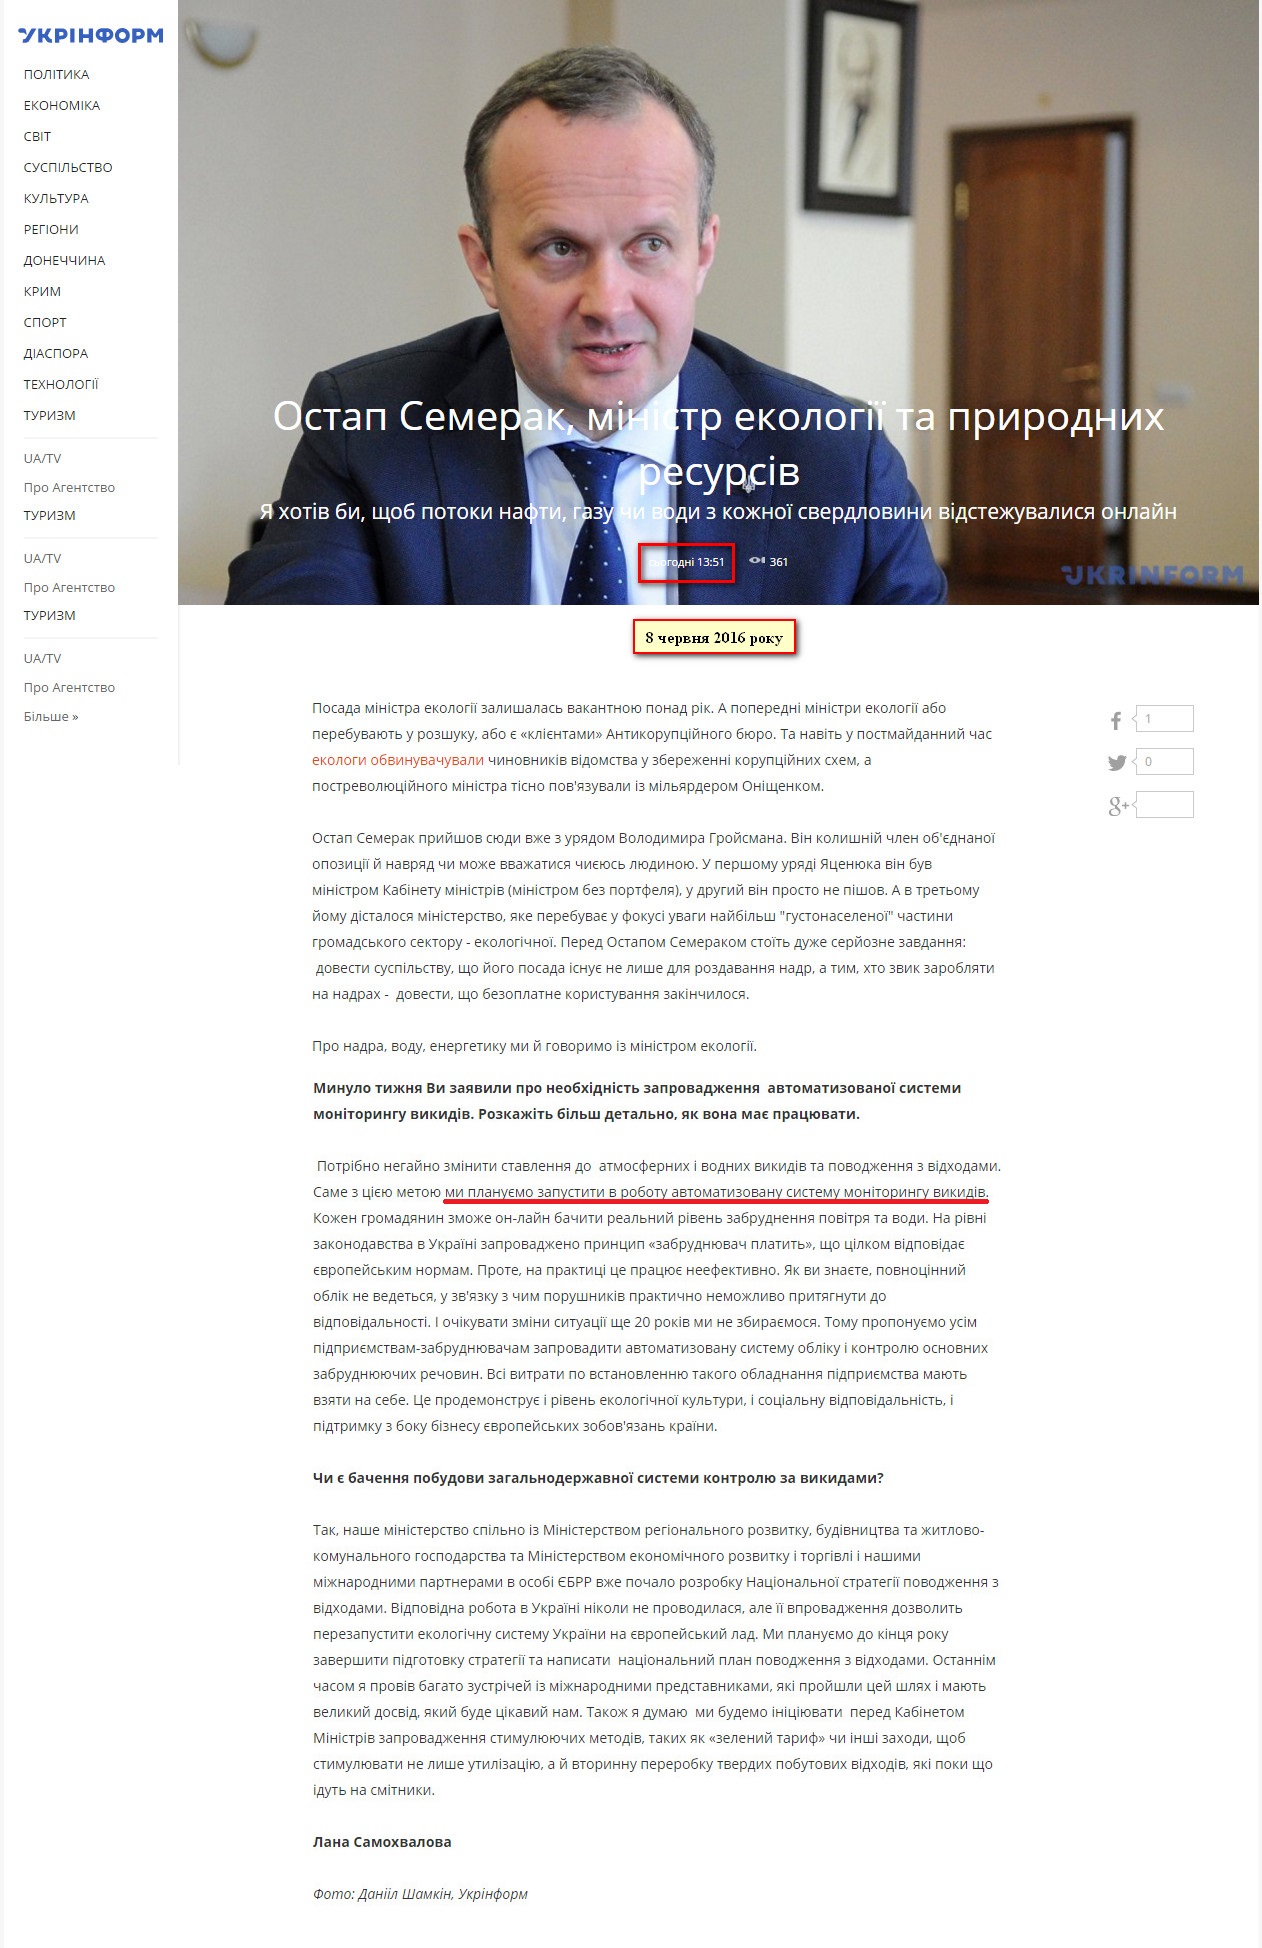 http://www.ukrinform.ua/rubric-politycs/2031002-ostap-semerak-ministr-ekologii-ta-prirodnih-resursiv.html